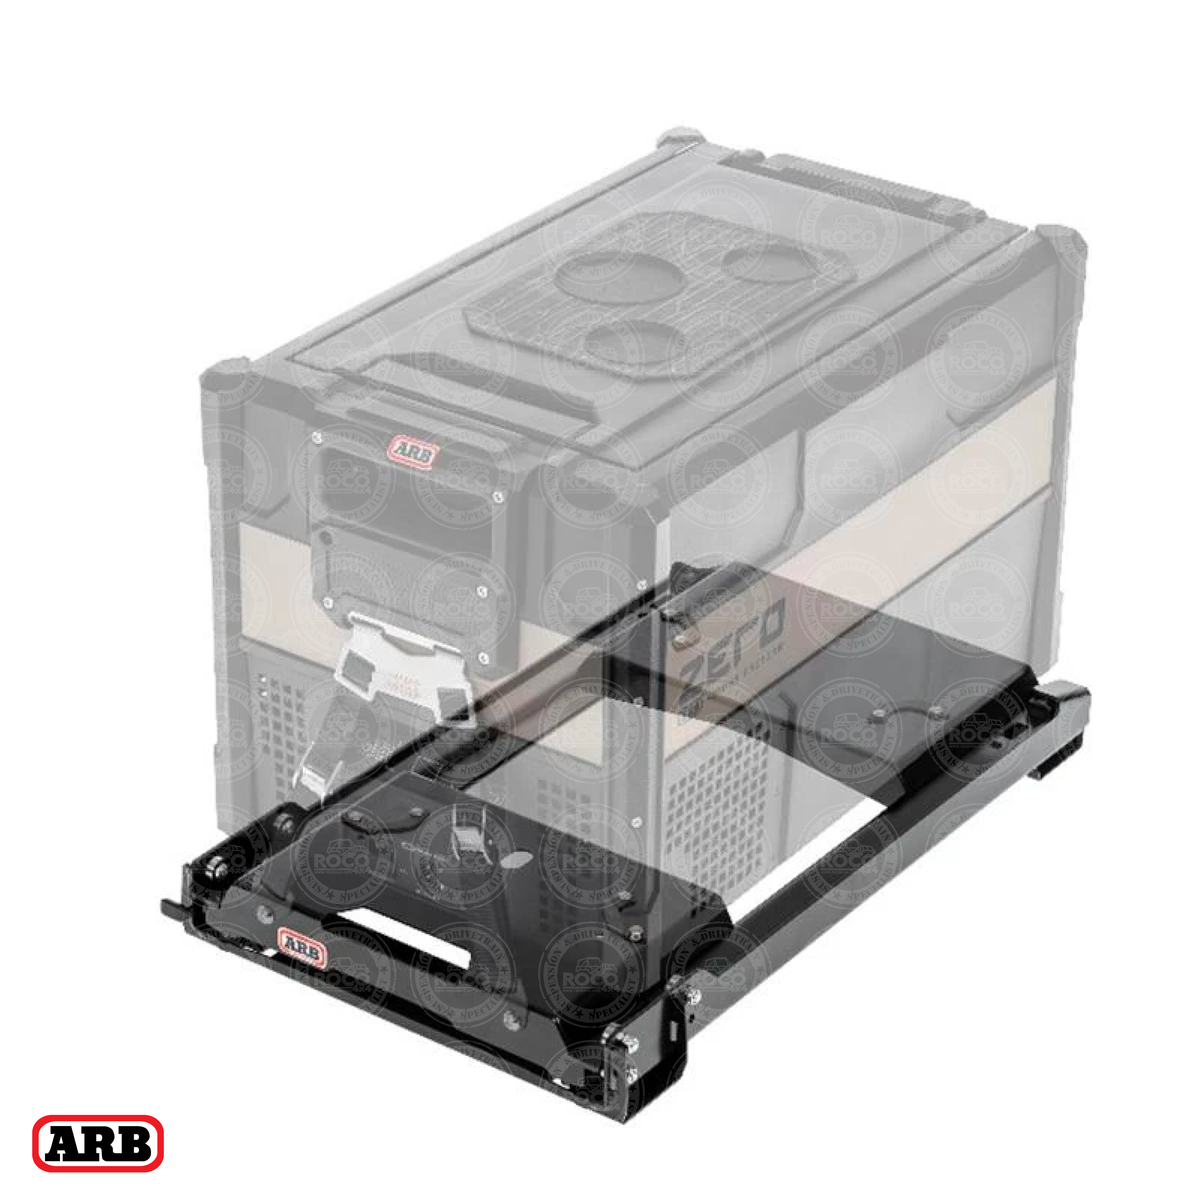 ARB Zero 38/47 Quart Portable Fridge/Freezer Slide